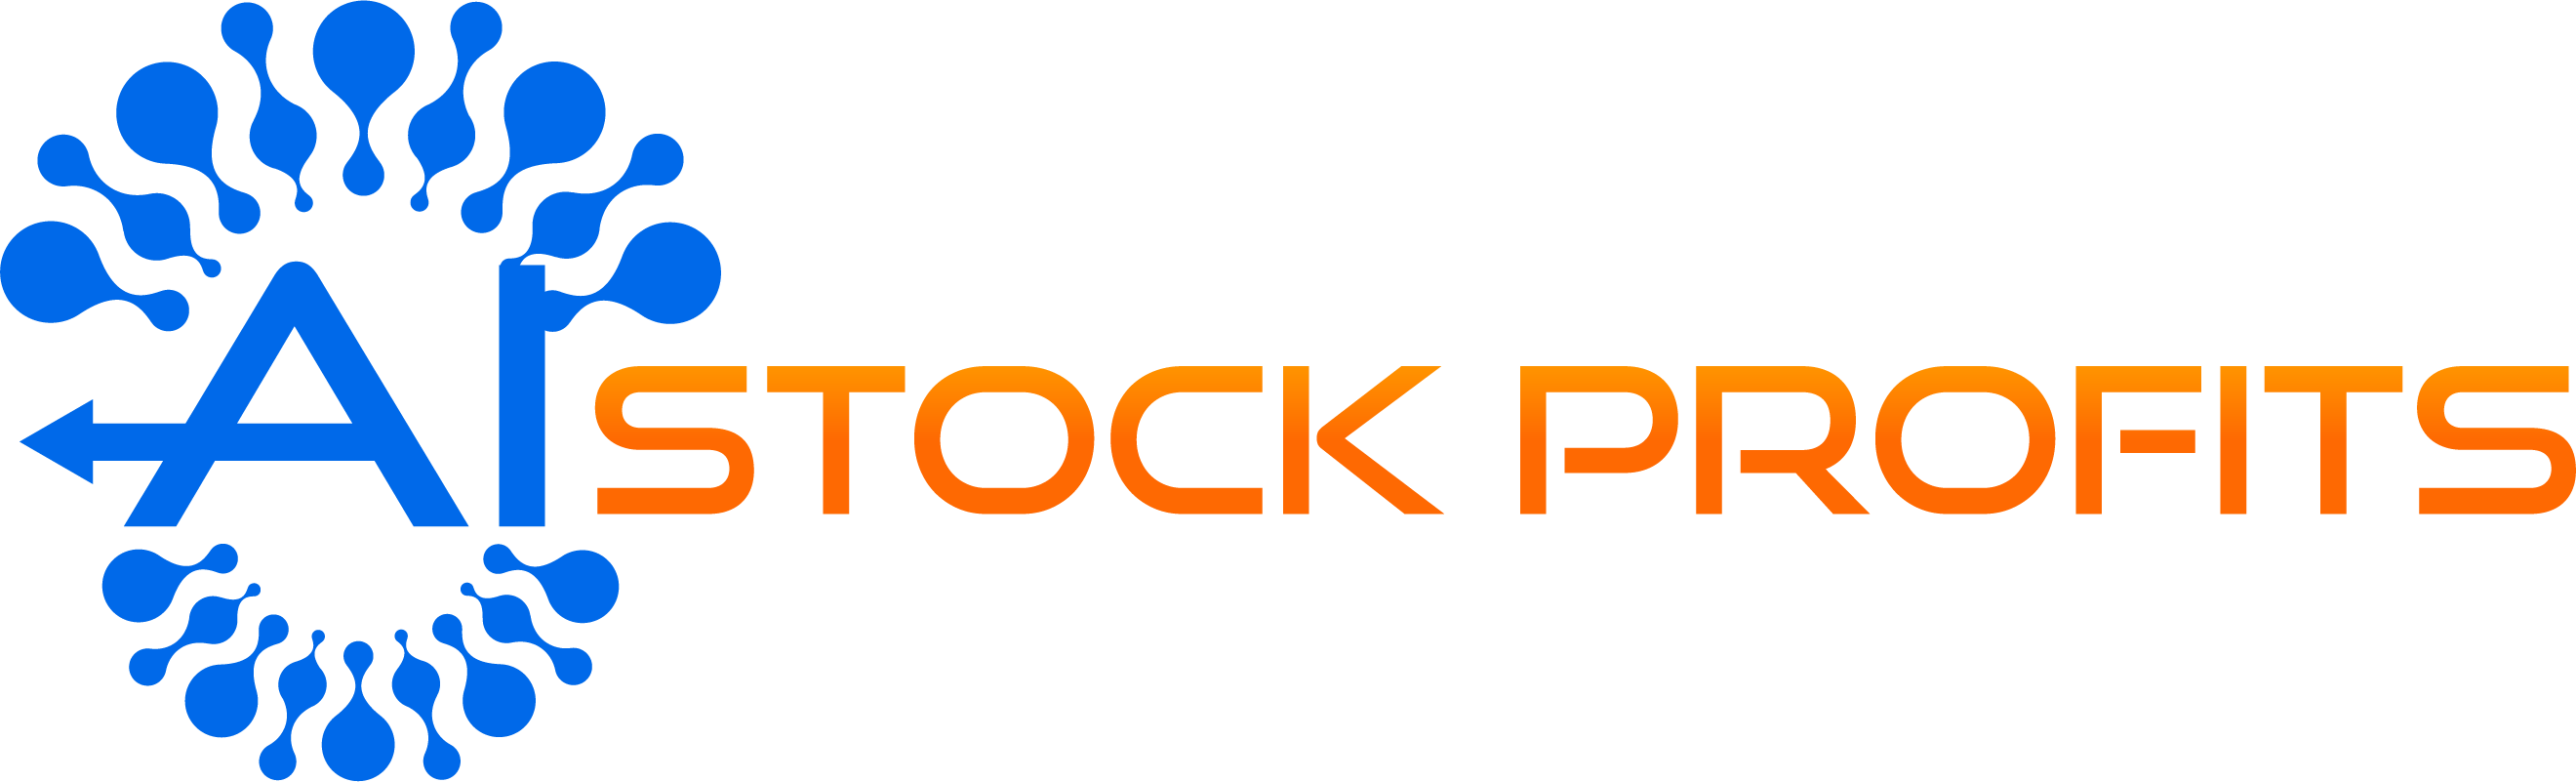 Ai Stock Profit App - Meet the Team Behind the Ai Stock Profit App